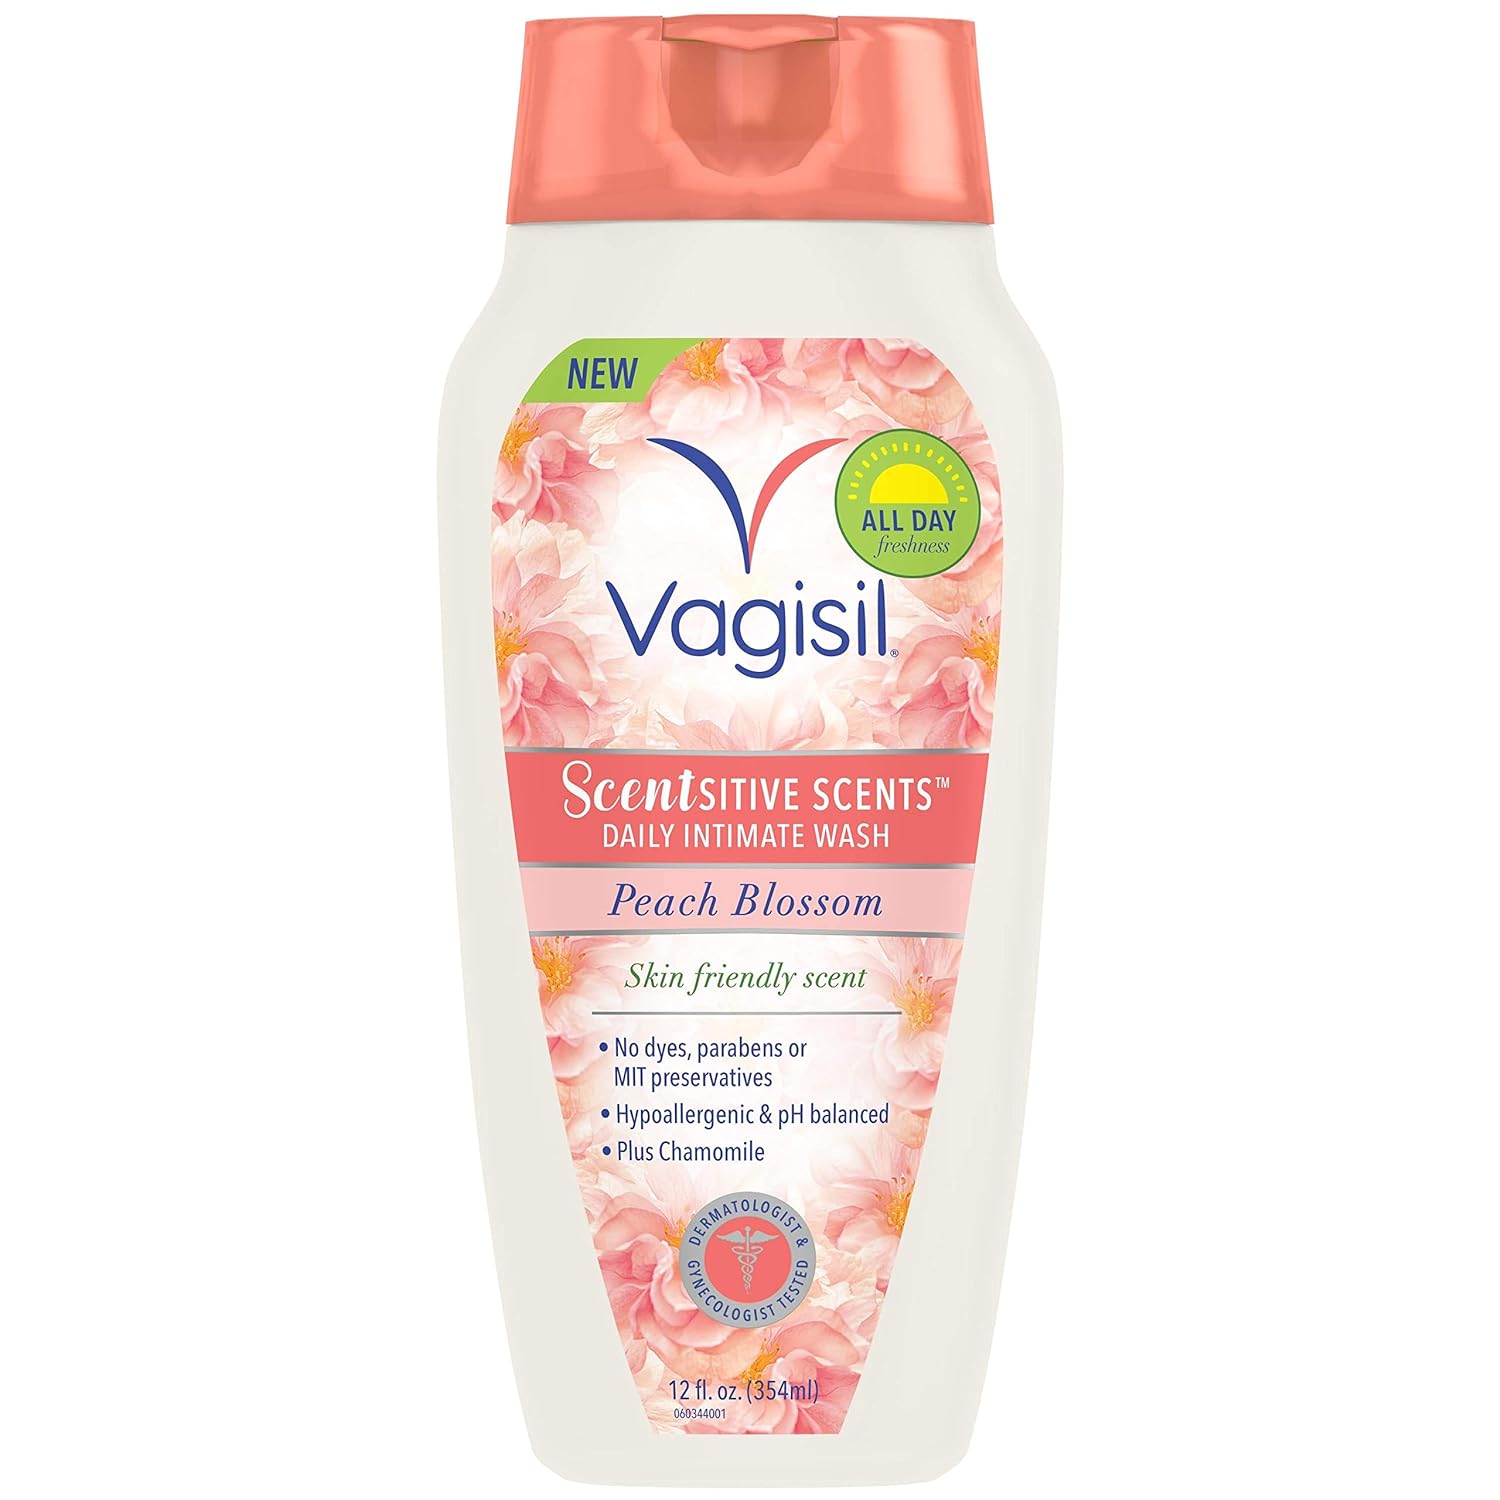 Vagisil Scentsitive Scents Daily Feminine Intimate Wash, Peach Blossom, 12 fl oz (Pack of 2)